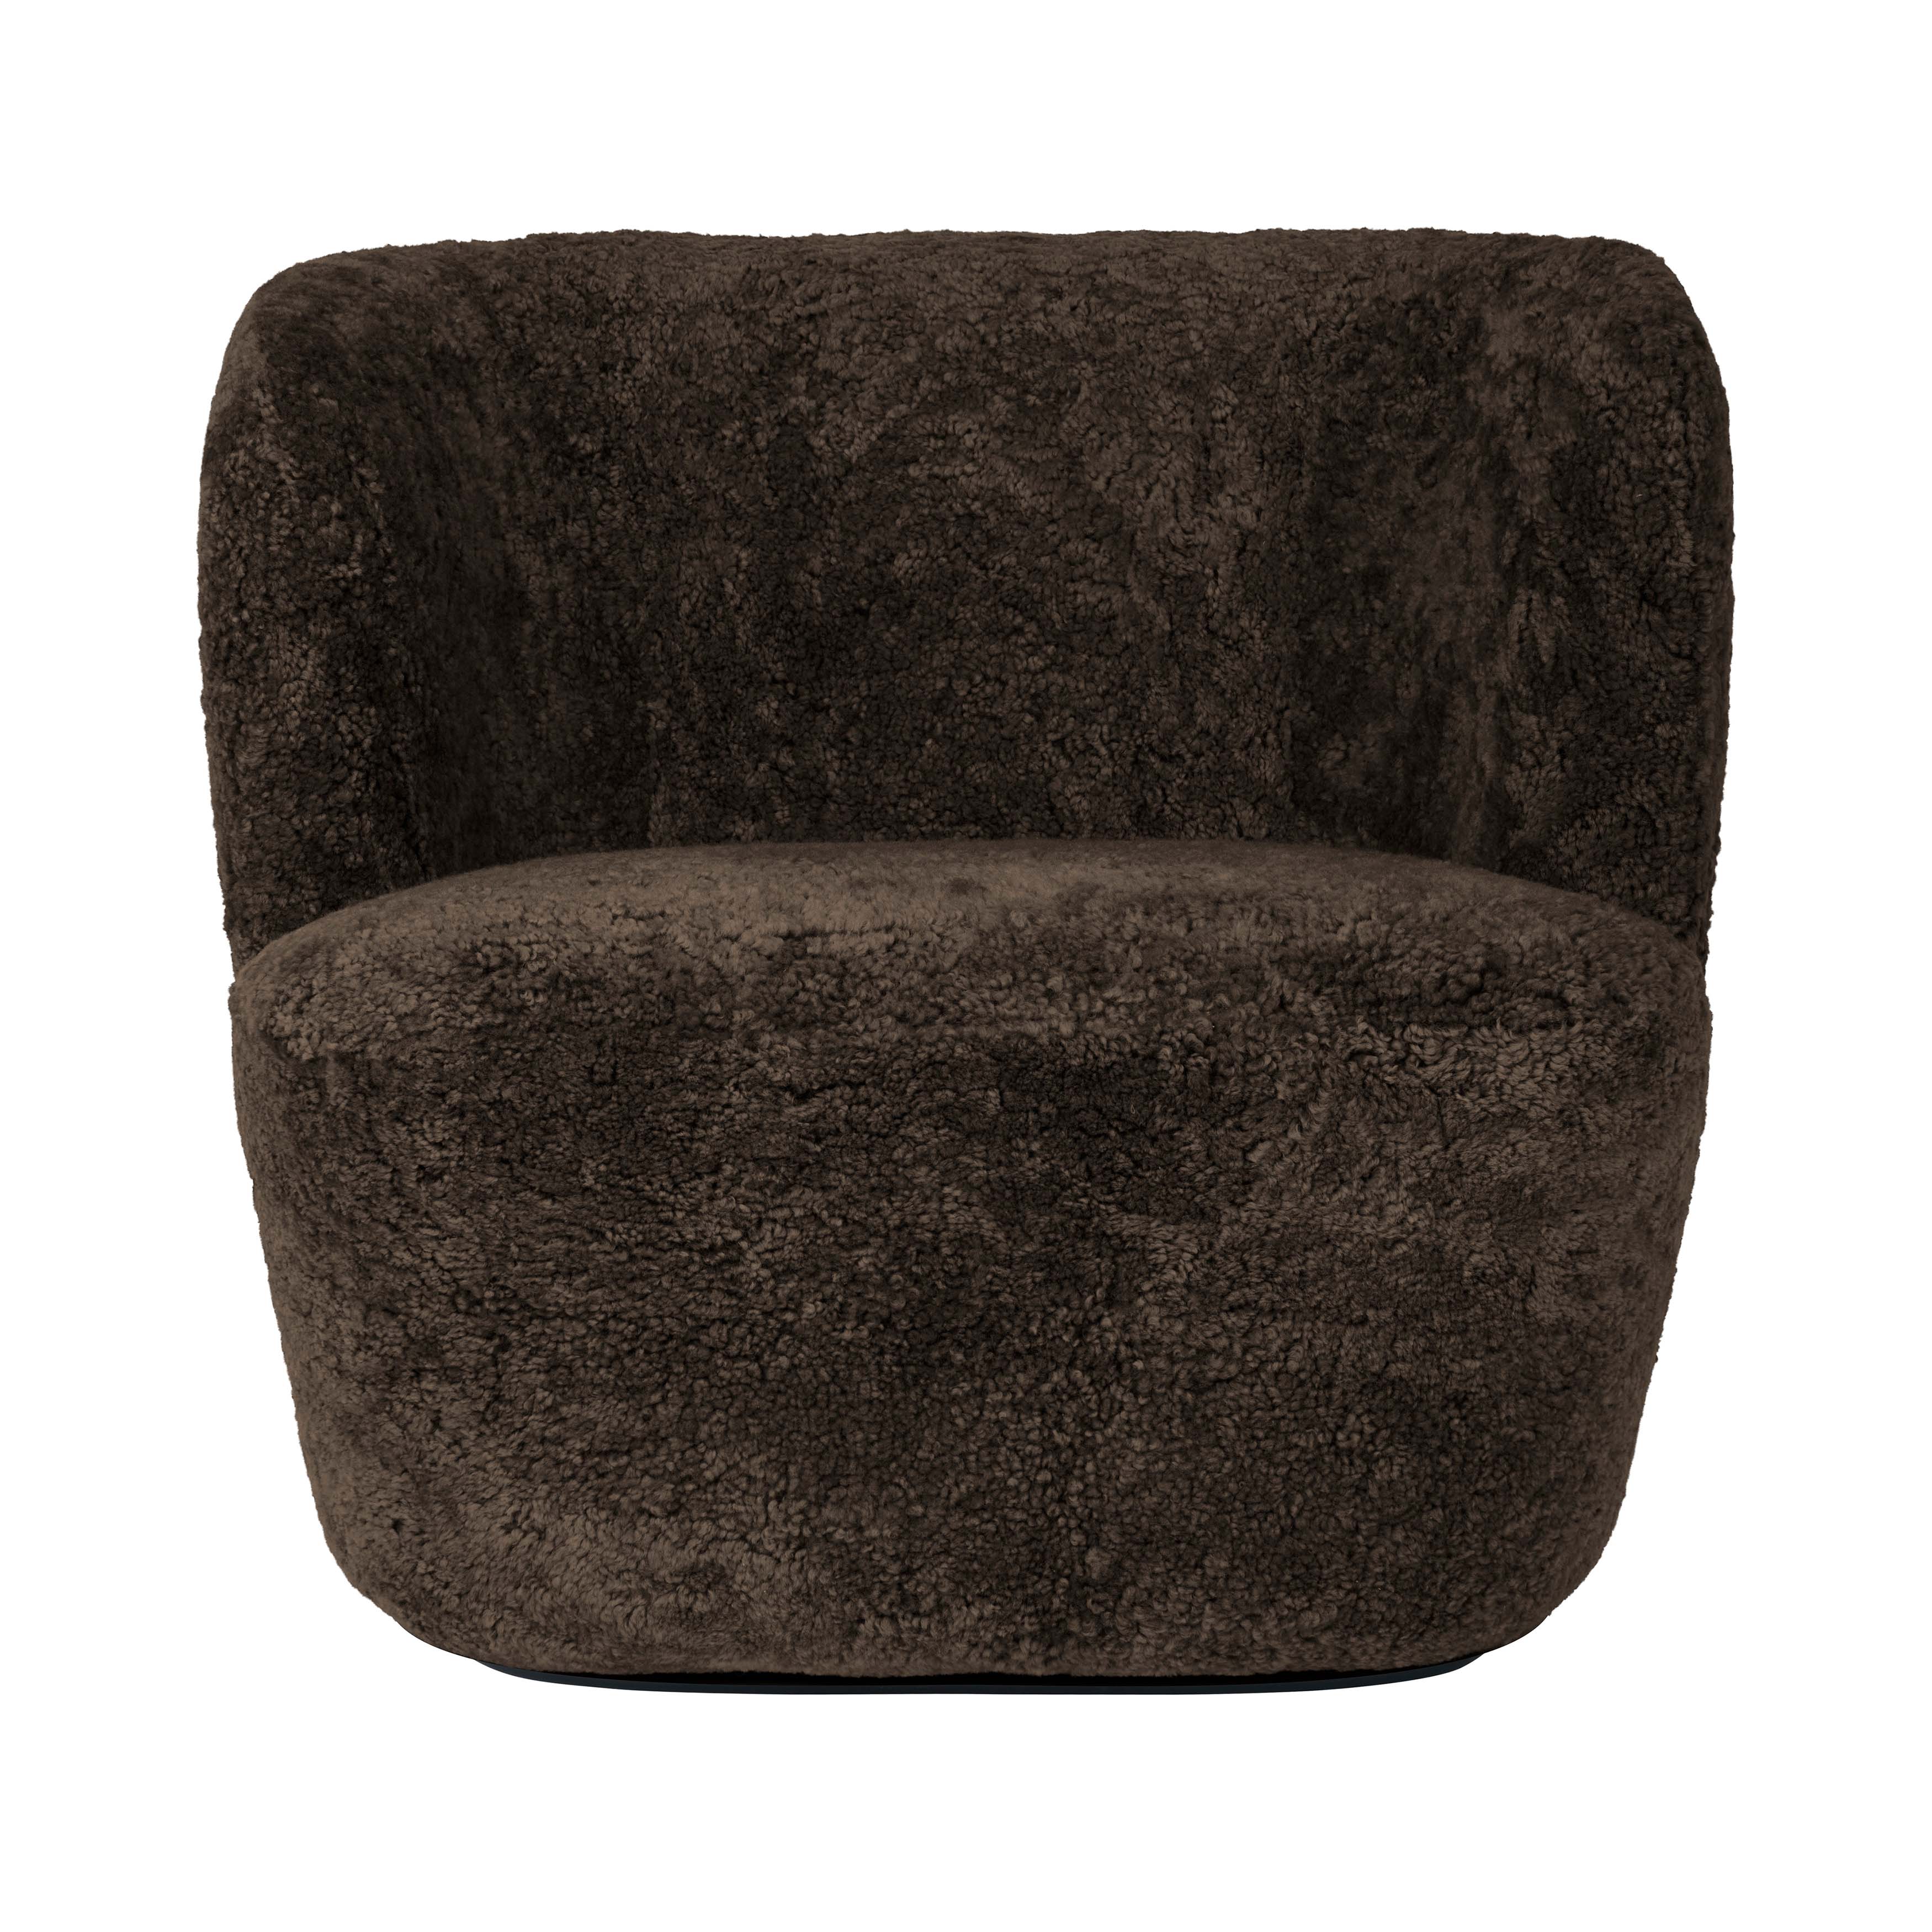 Stay Lounge Chair: Large + Black + Skandilock + Curly + Espresso